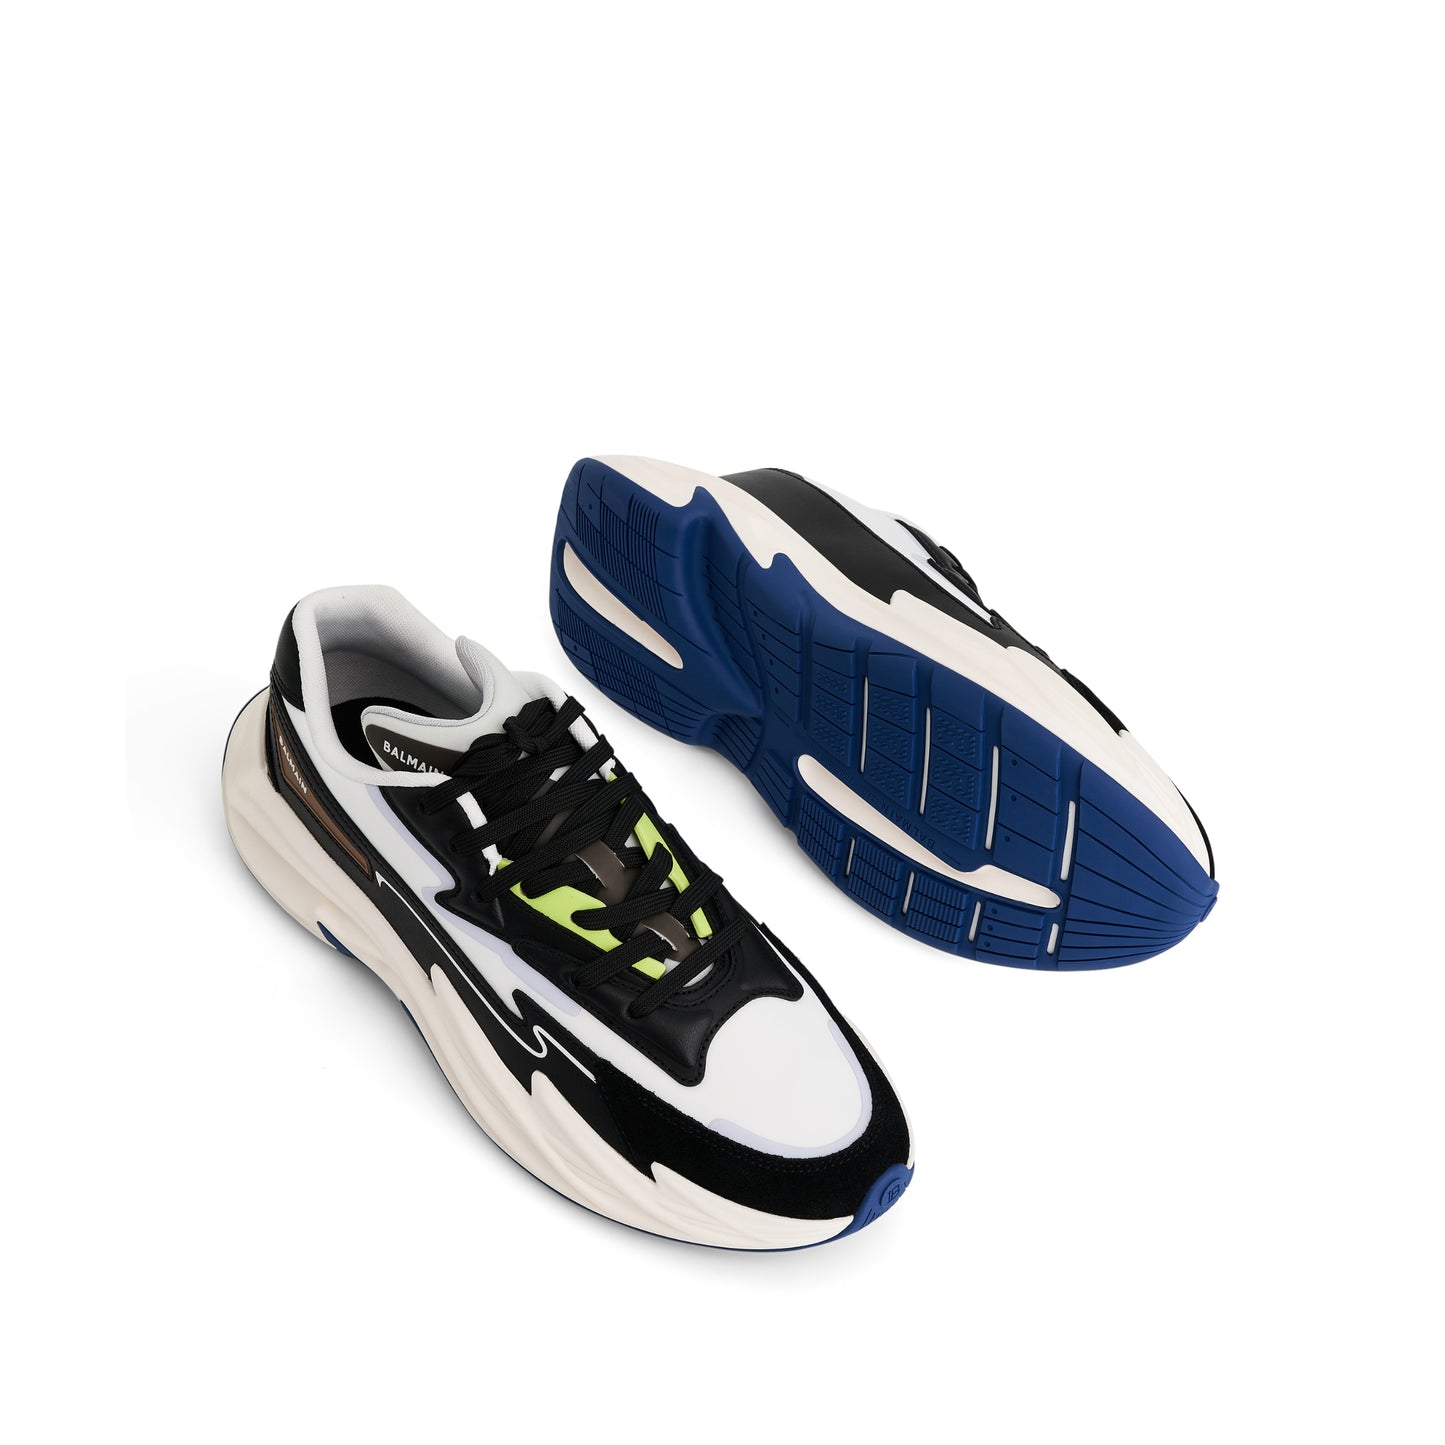 B-DR4G0N Low Sneaker in Blue/Yellow/Black